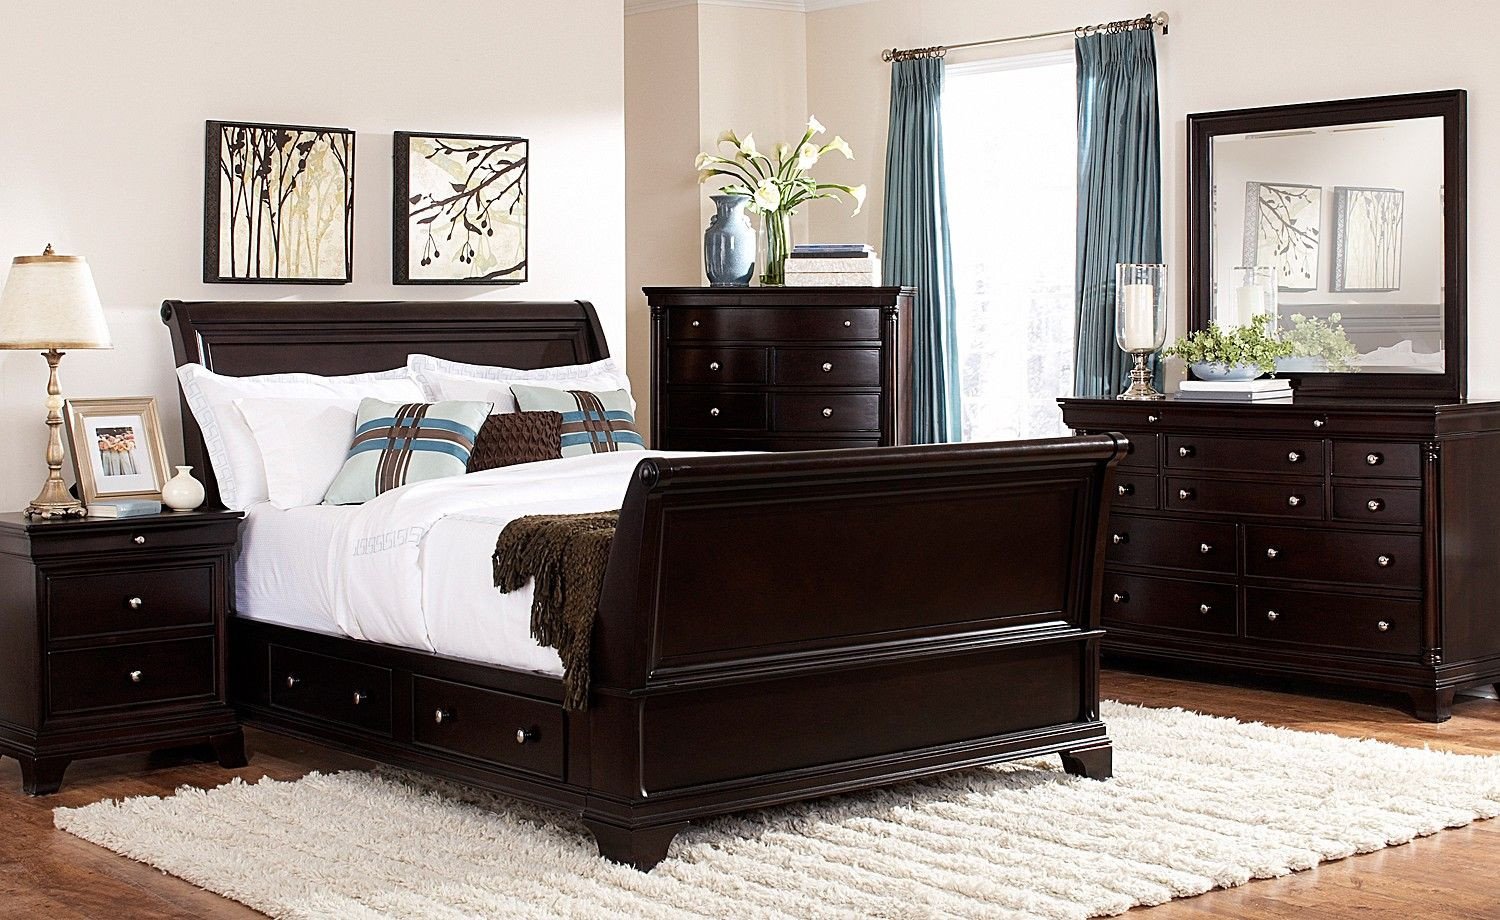 Black Leather Bedroom Set Elegant Lakeshore Bedroom 7 Pc Queen Storage Bedroom Furniture